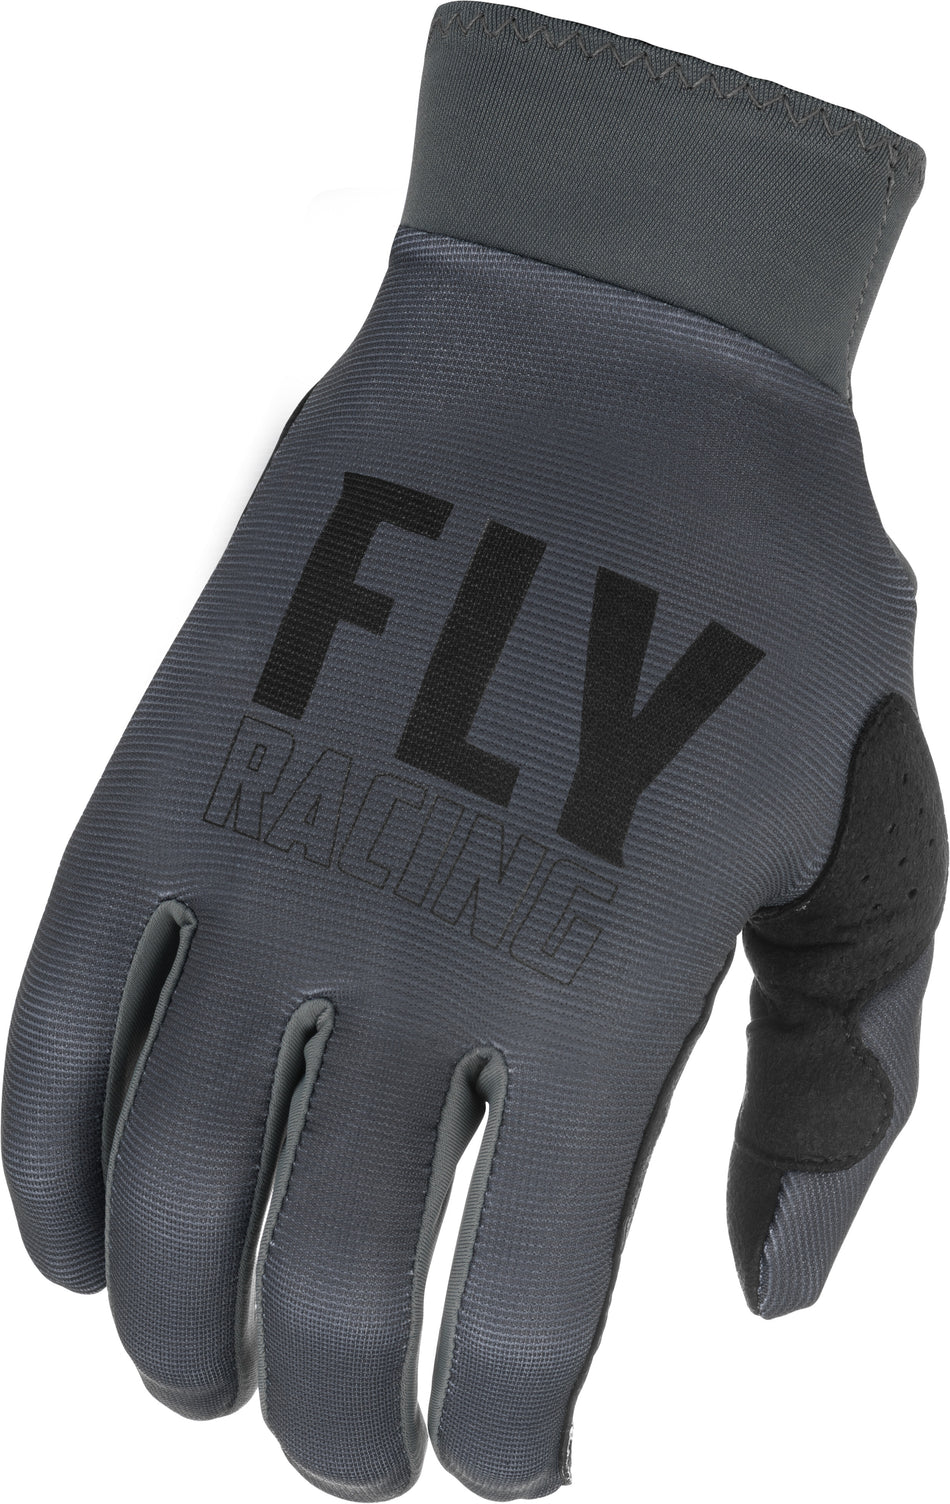 FLY RACING Pro Lite Gloves Grey/Black Lg 374-856L